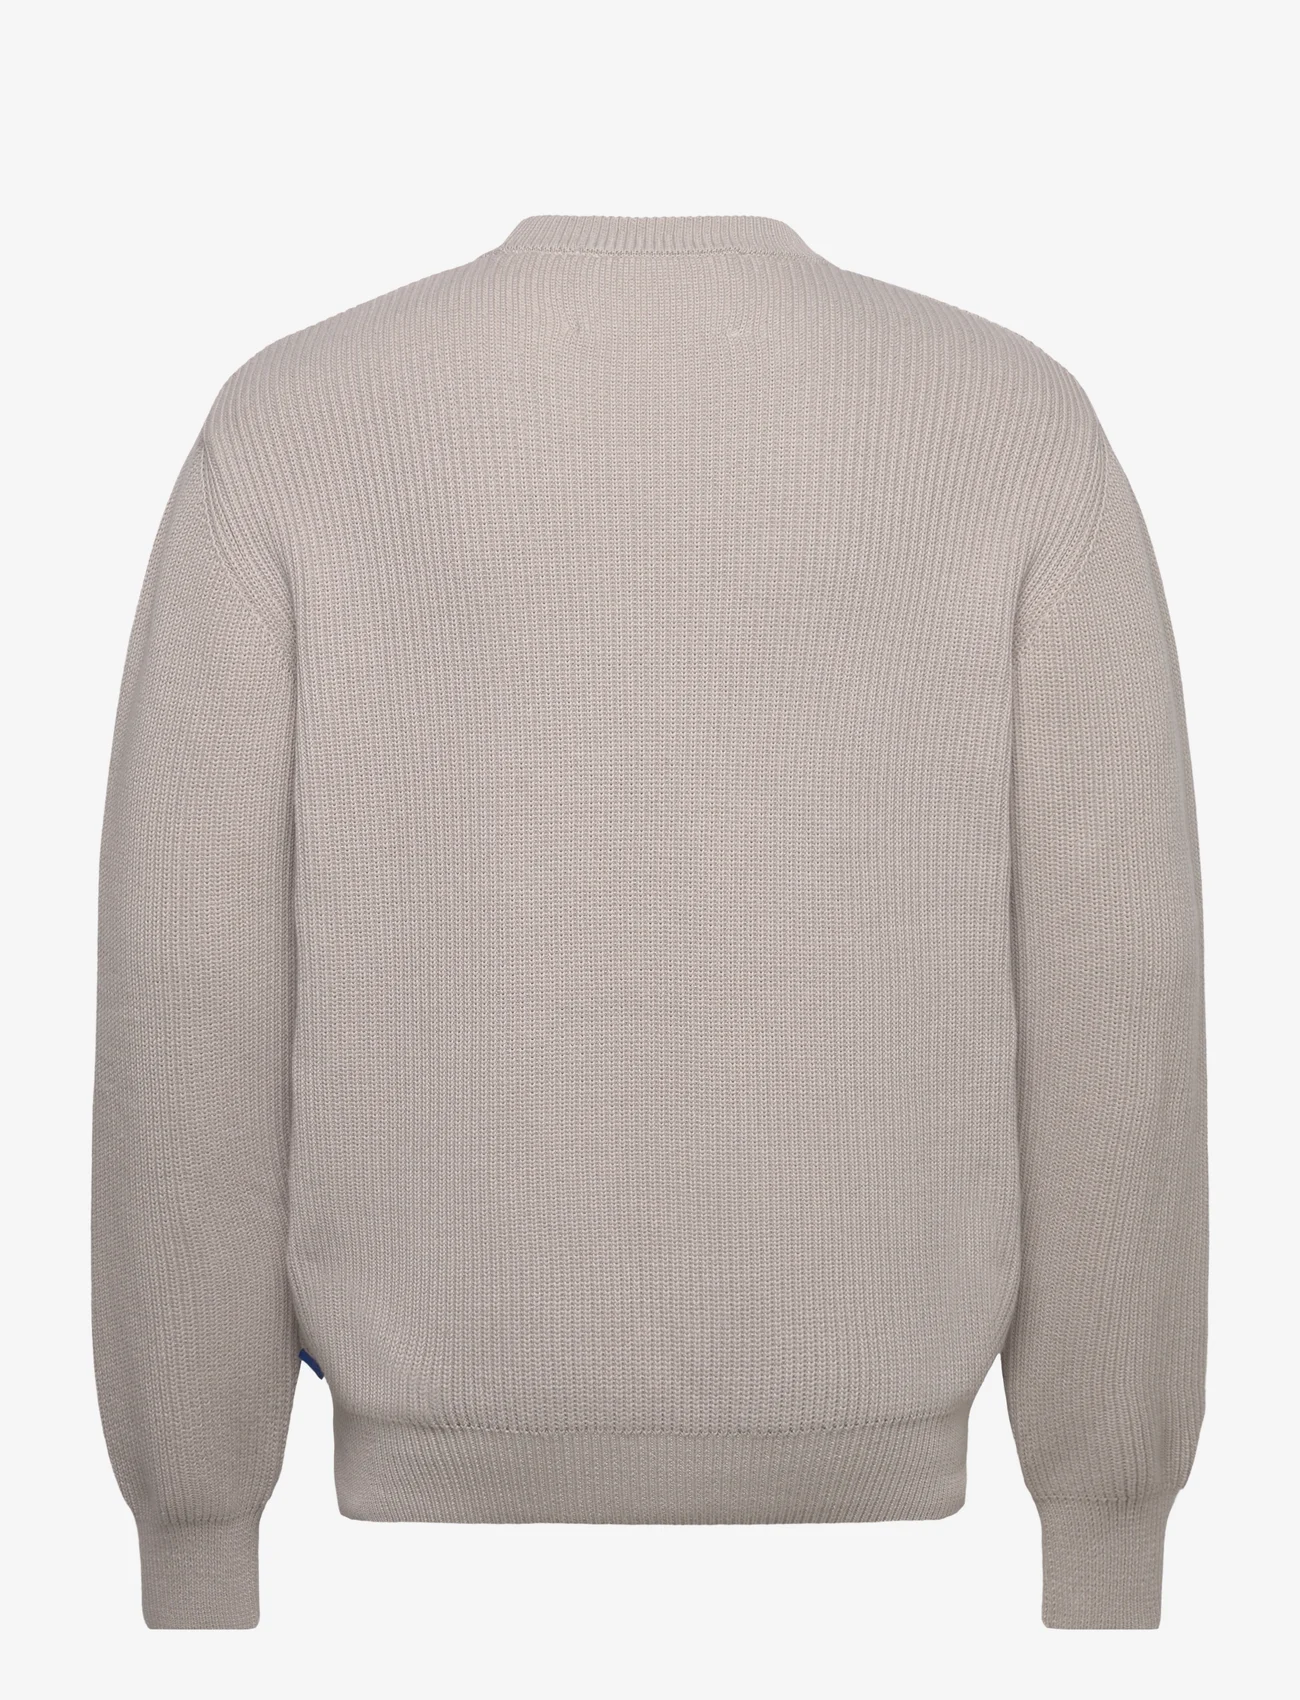 Garment Project - Round Neck Knit - Light Grey - nordic style - light grey - 1